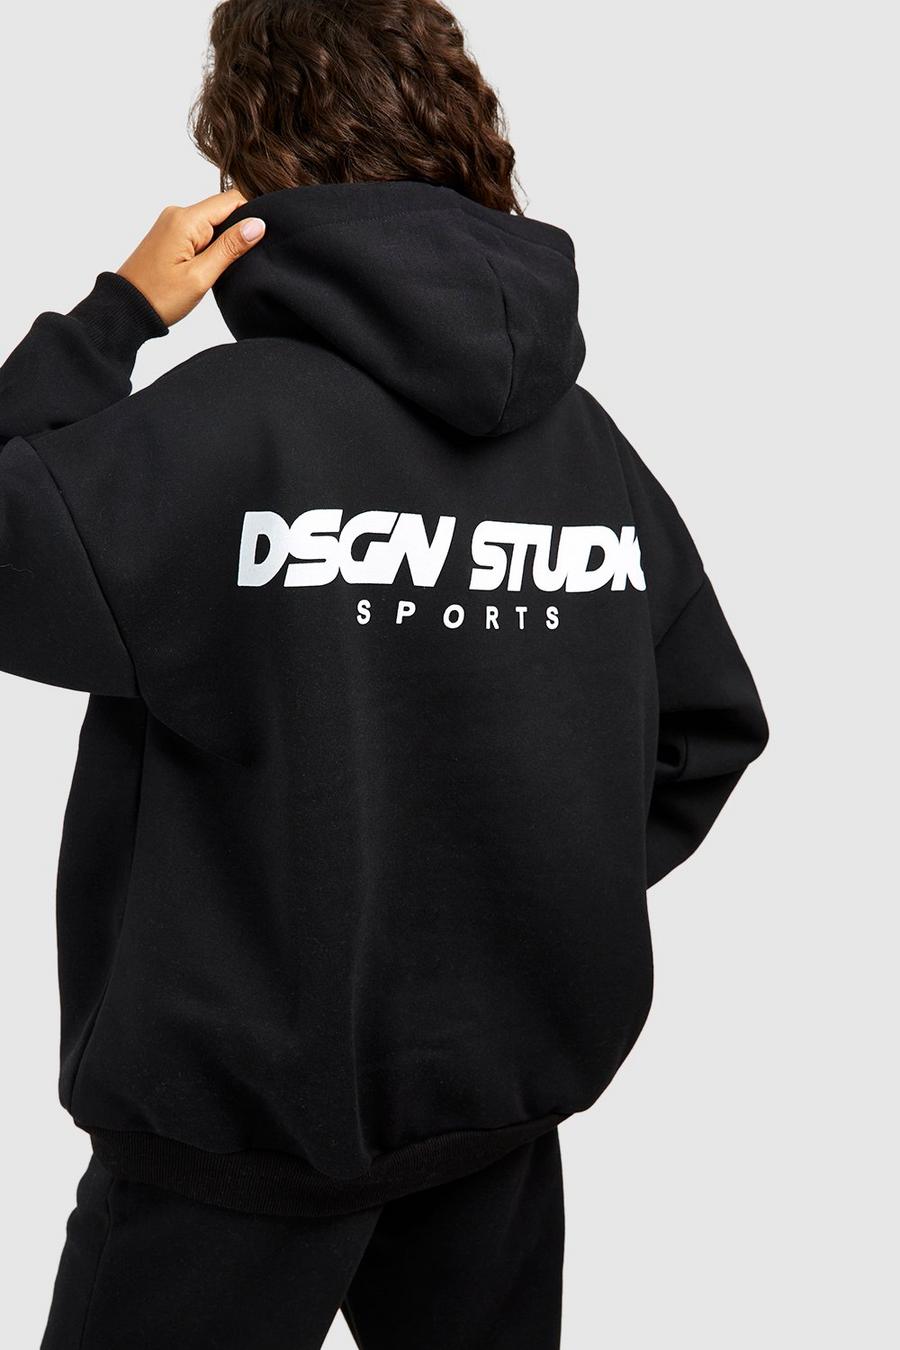 Black Dsgn Studio Sports Oversized Hoodie image number 1